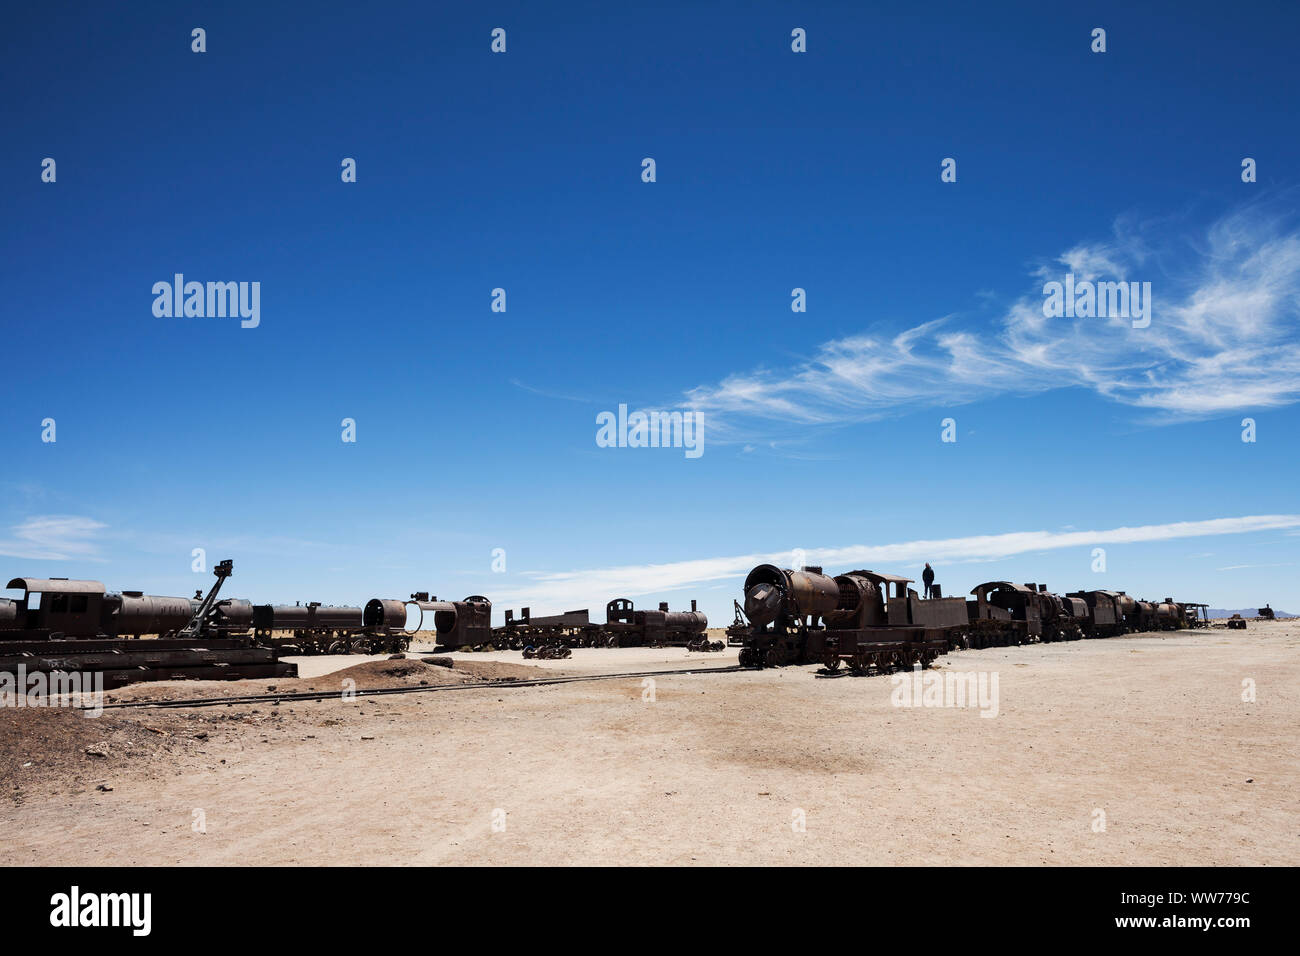 Bolivia, Uyuni, train cemetery Stock Photo